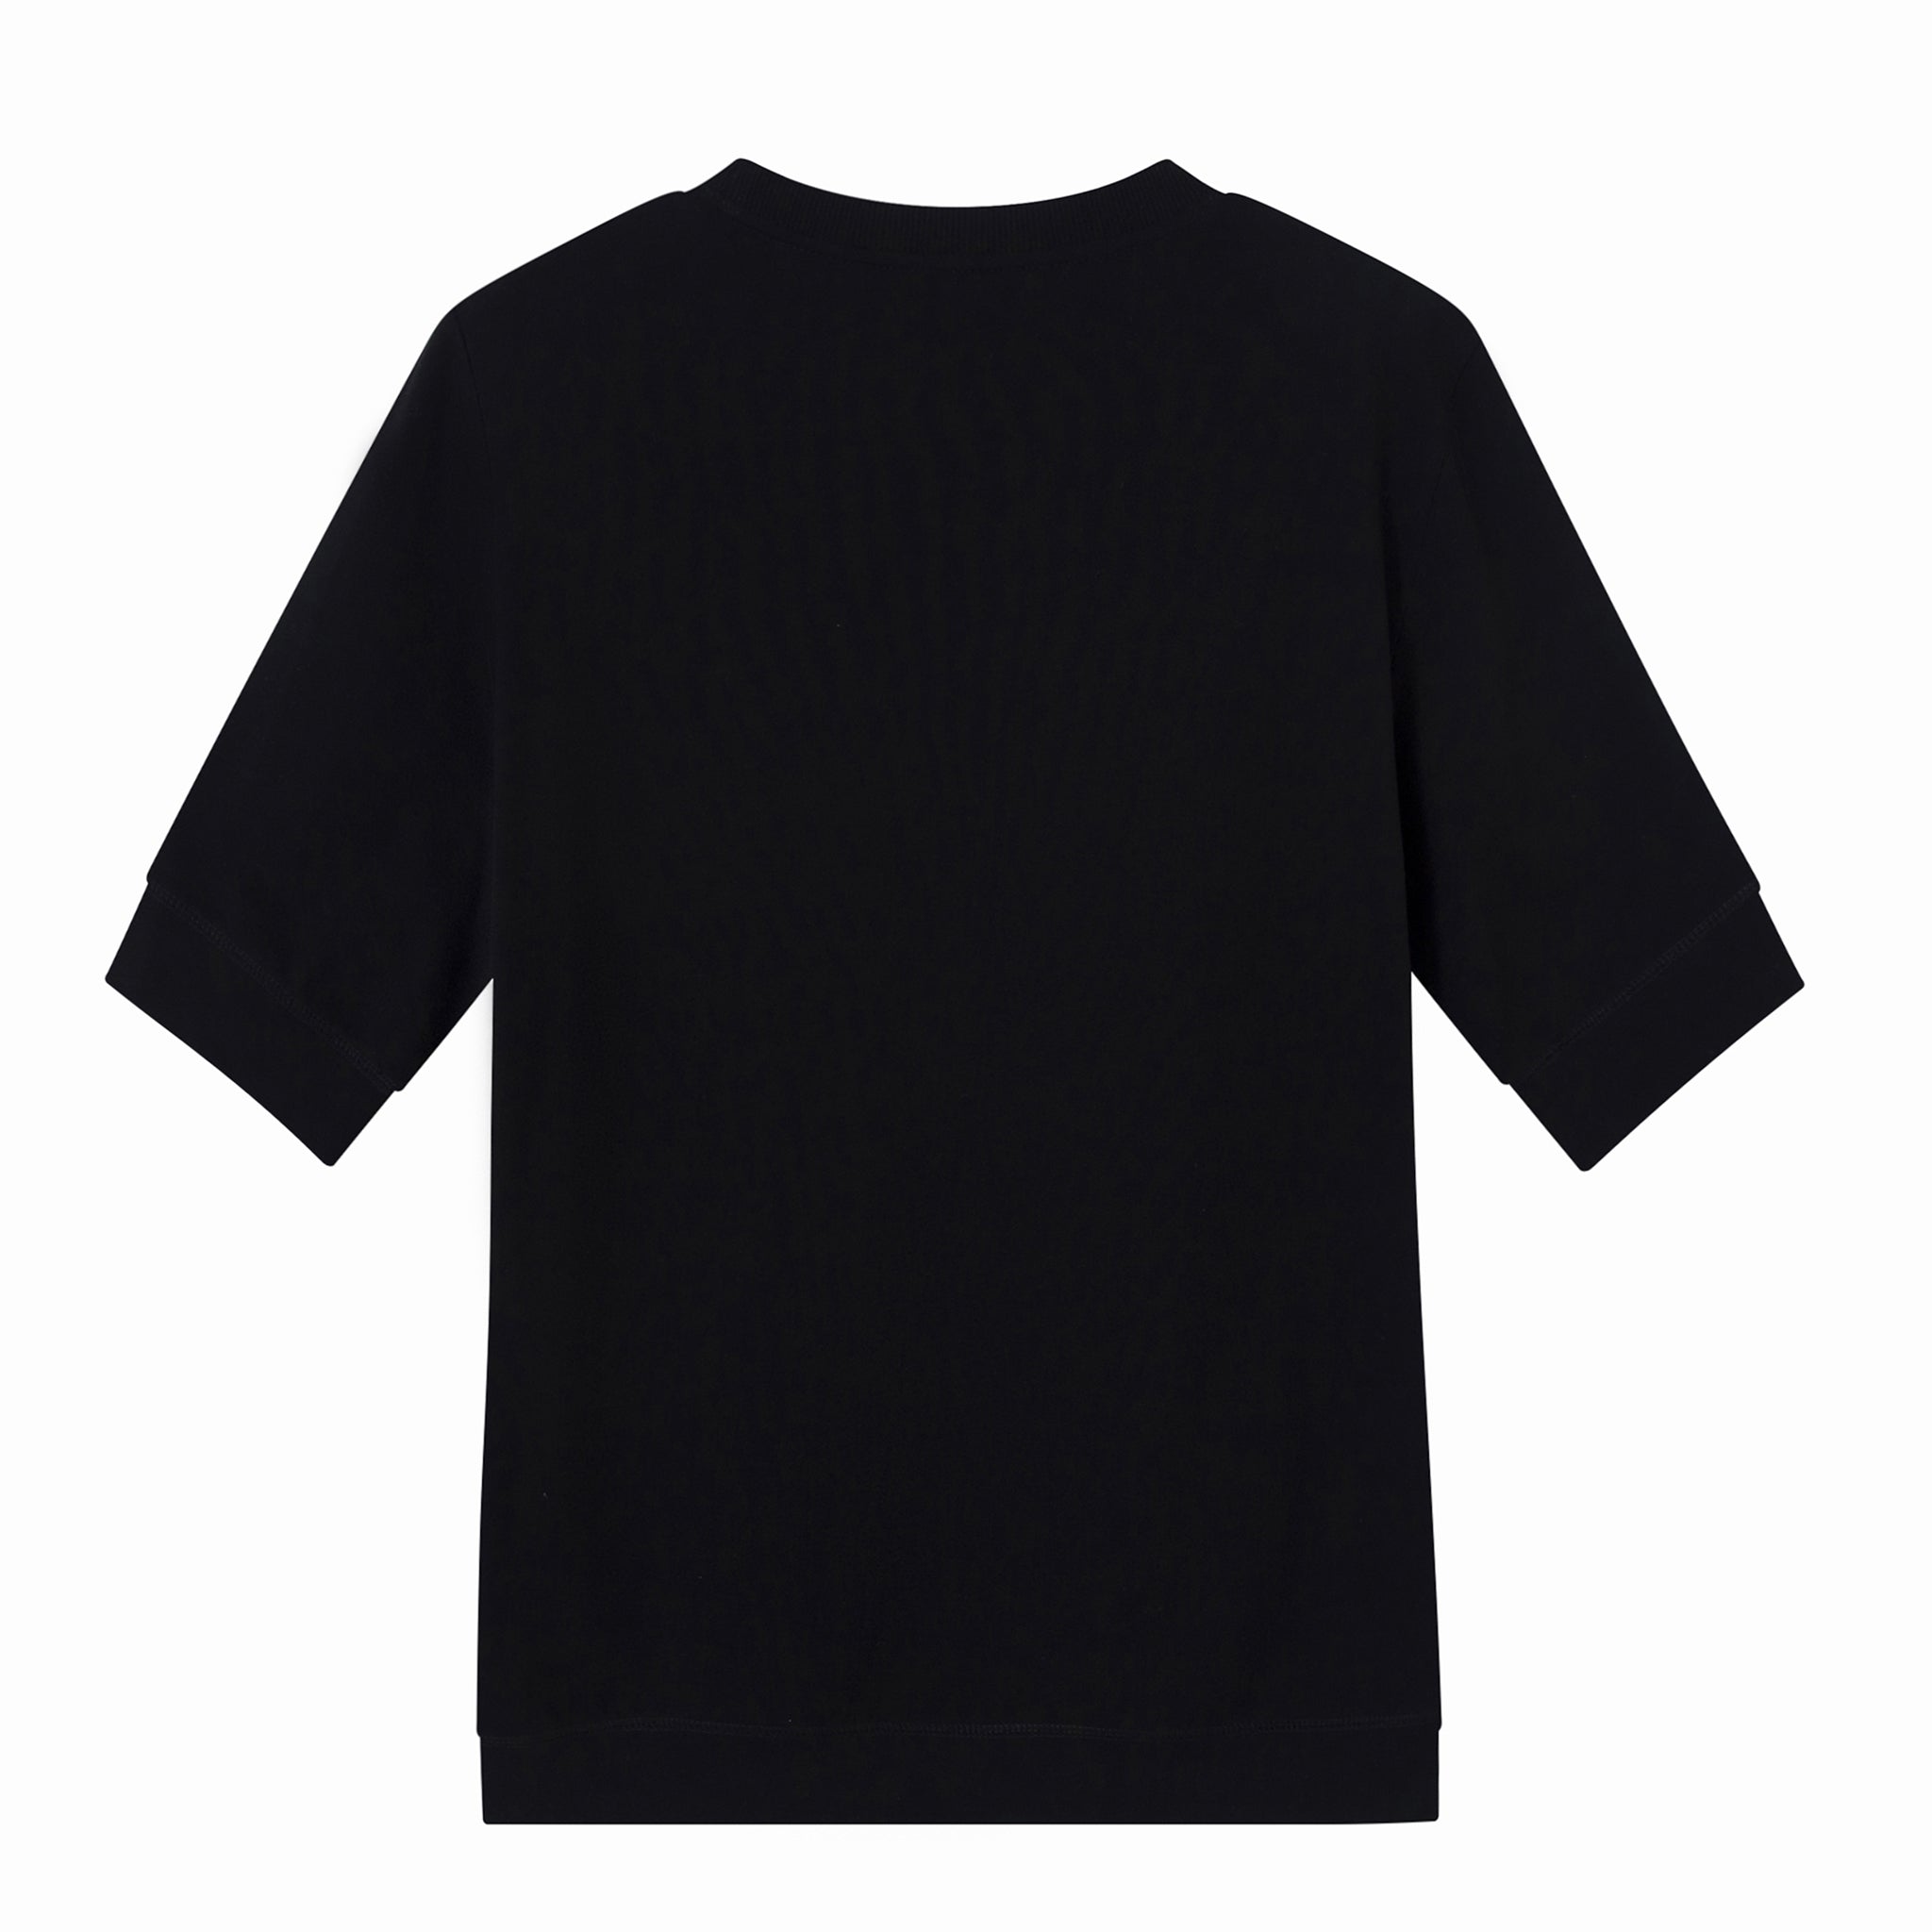 Demon/Chapai half sleeve sweatshirt - Black